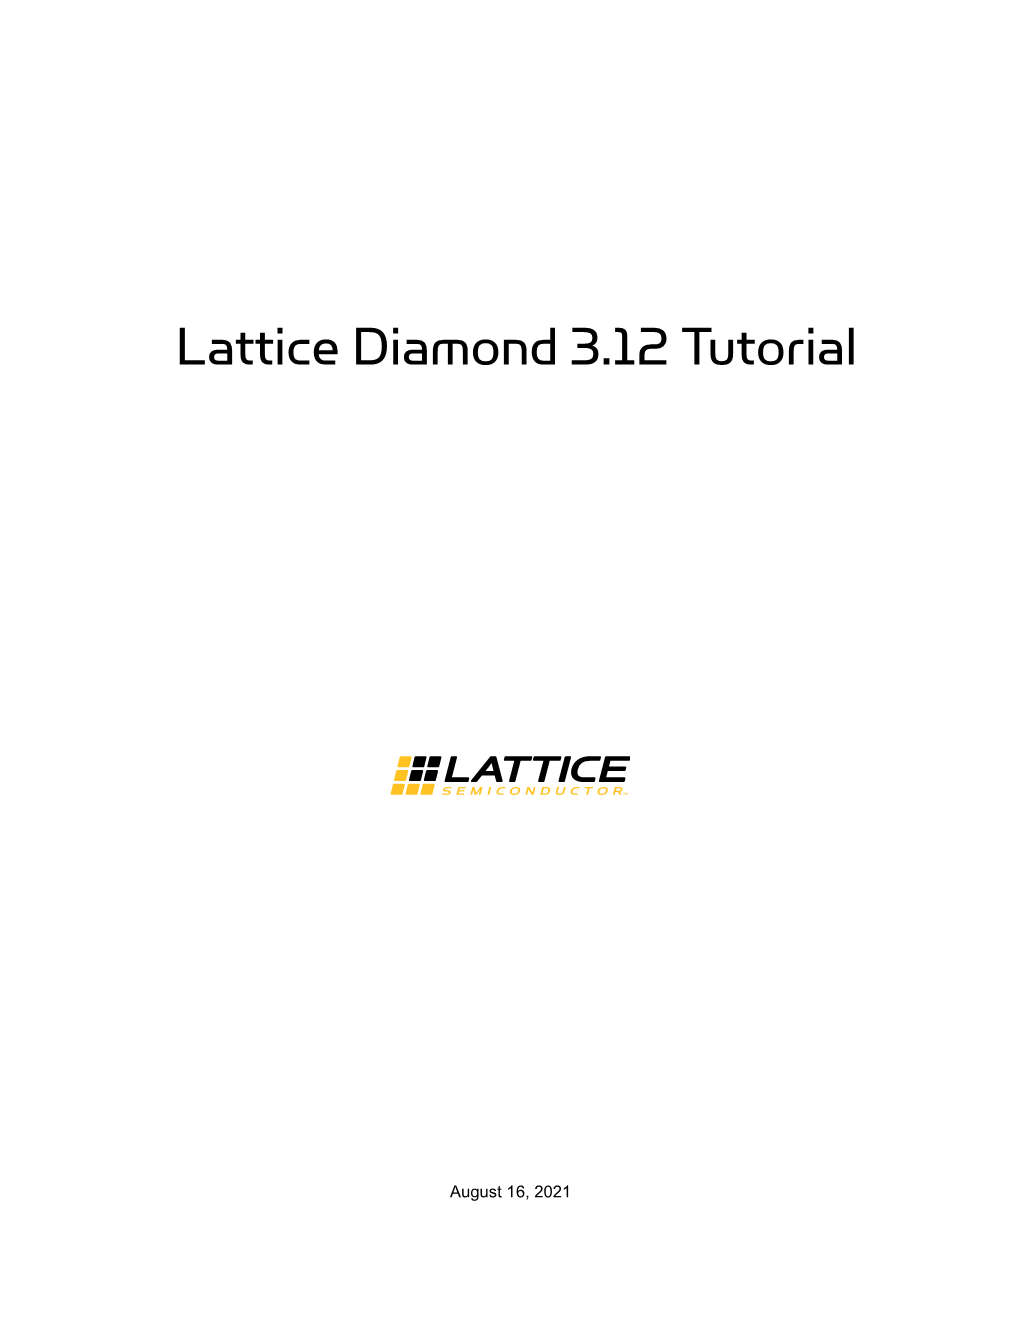 Lattice Diamond 3.12 Tutorial